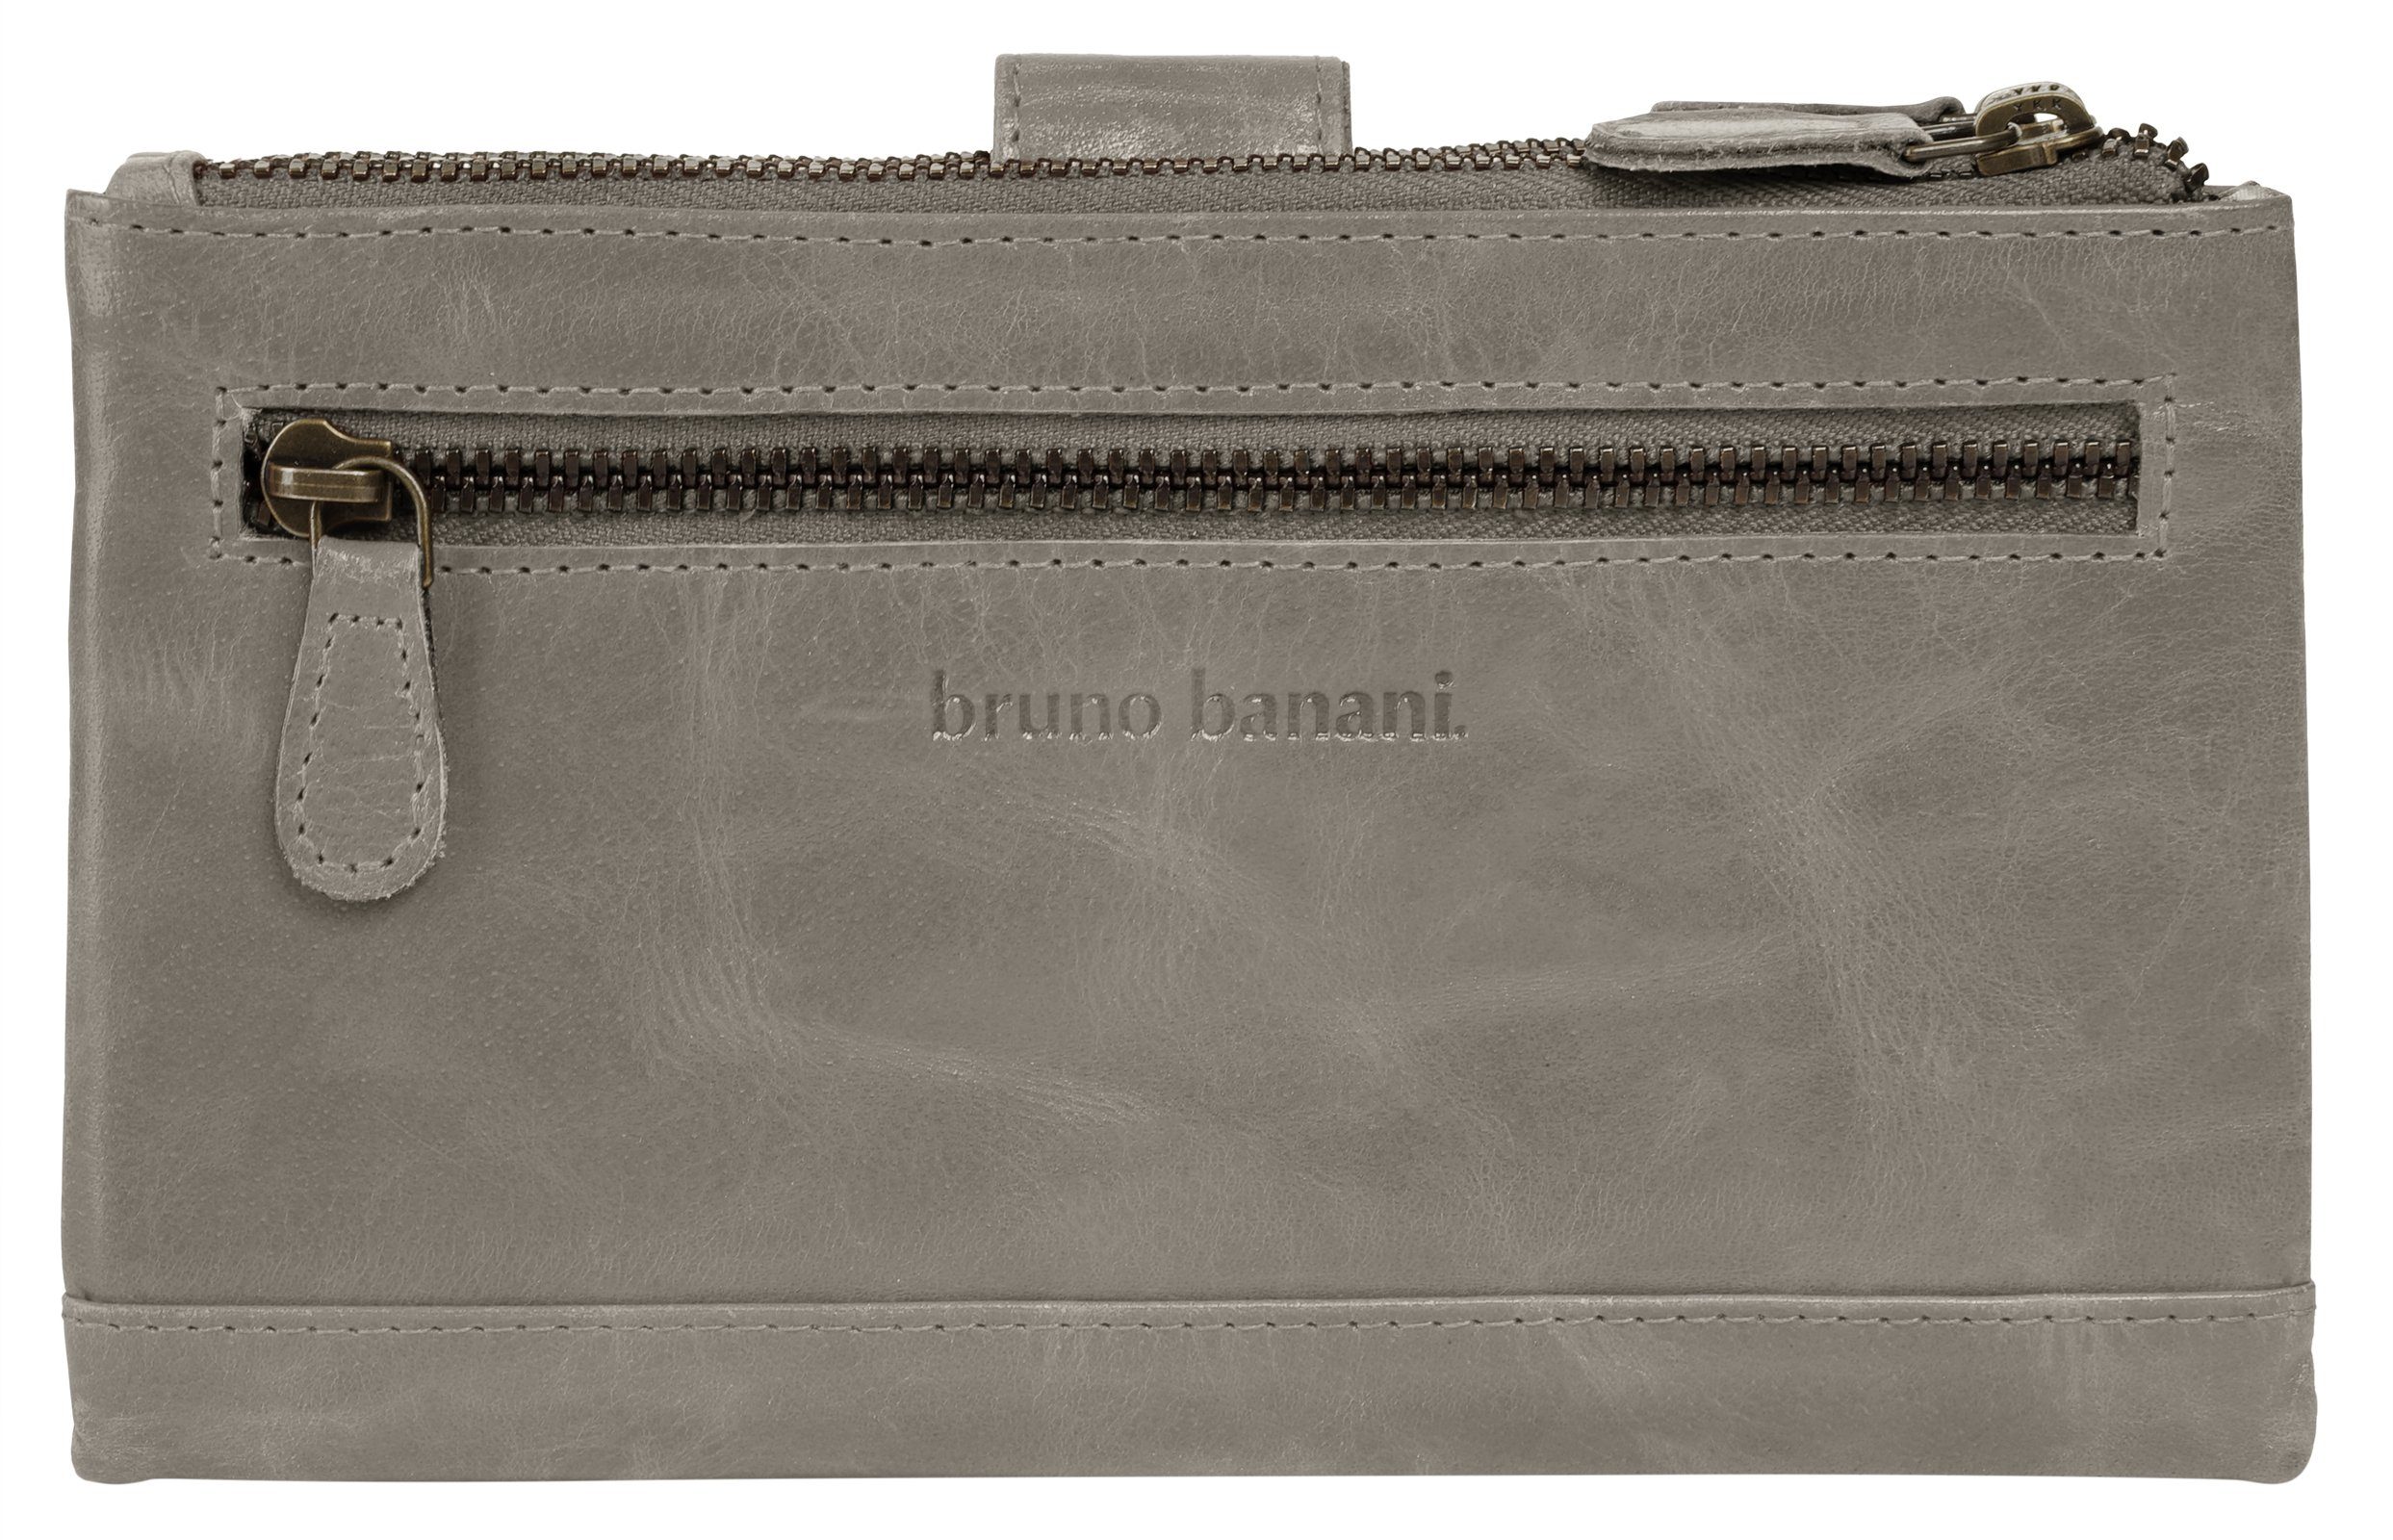 Bruno Banani Geldbörse, echt grau Leder